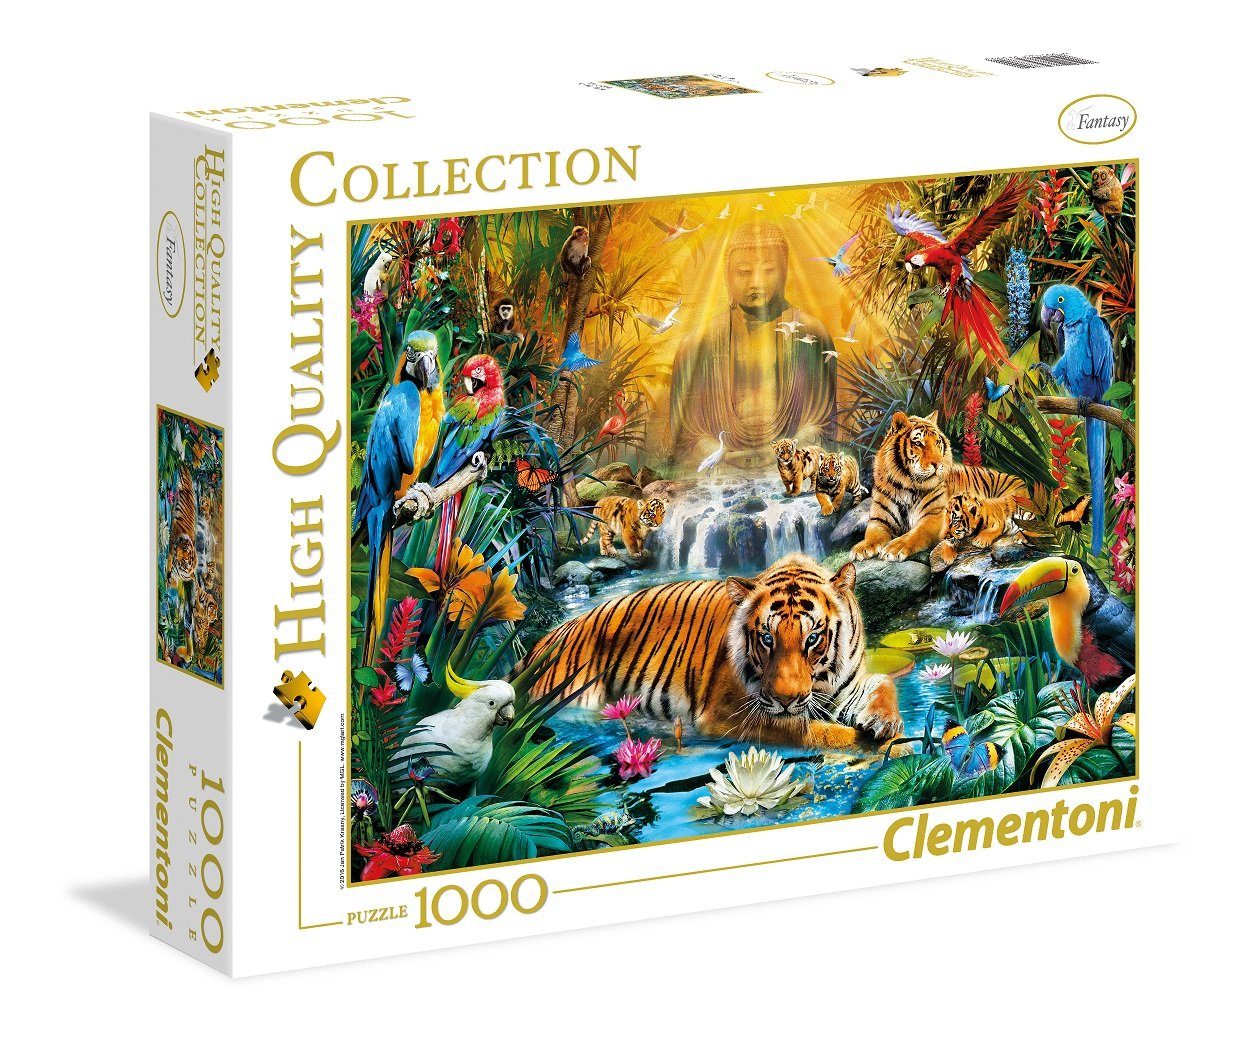 Clementoni® Puzzle Puzzles 501 bis 1000 Teile Clem-39380, Puzzleteile, Made in Europe | Puzzle